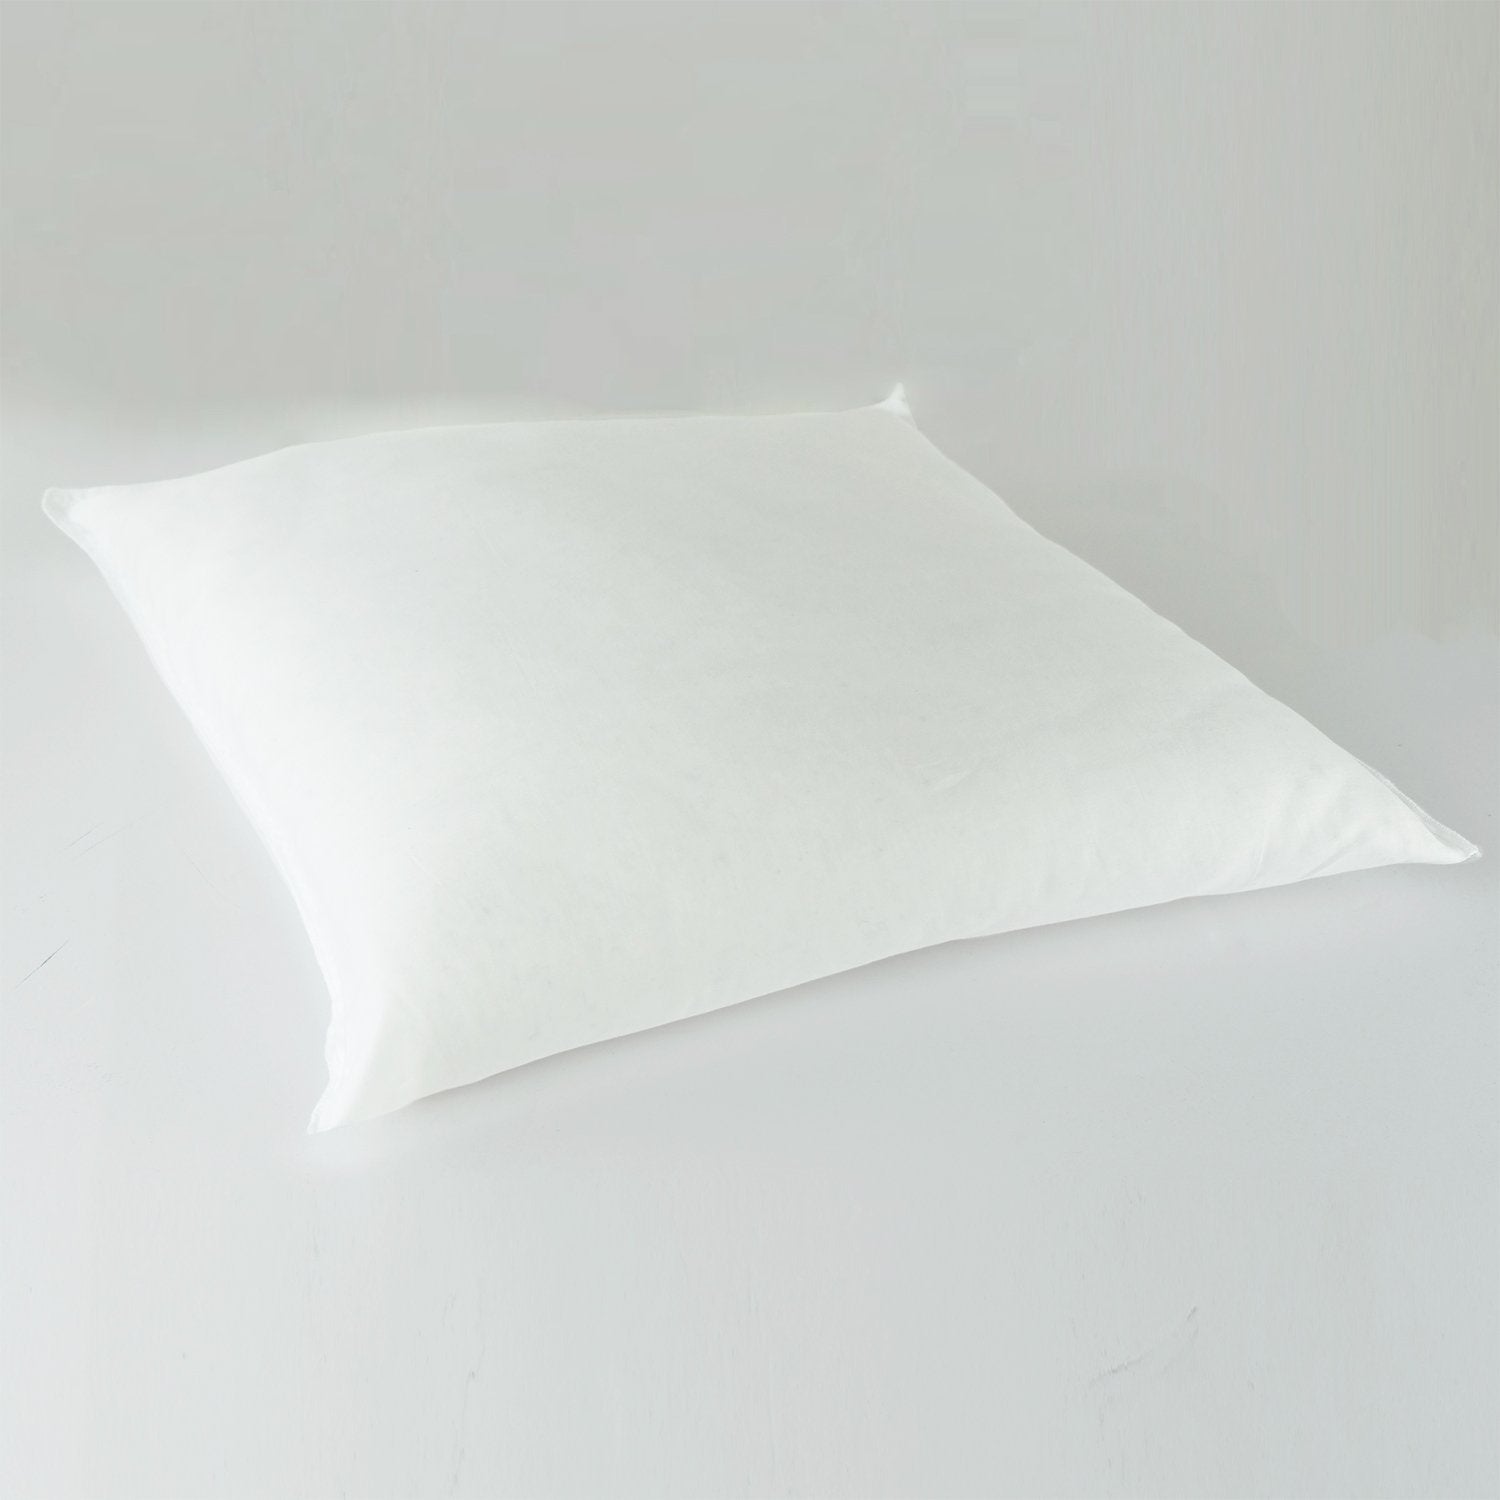 J-Life Fukurou Navy Zabuton Floor Pillow_Pillows & Shams_Zabuton Floor Pillows_100% Cotton_Reversible_Handmade